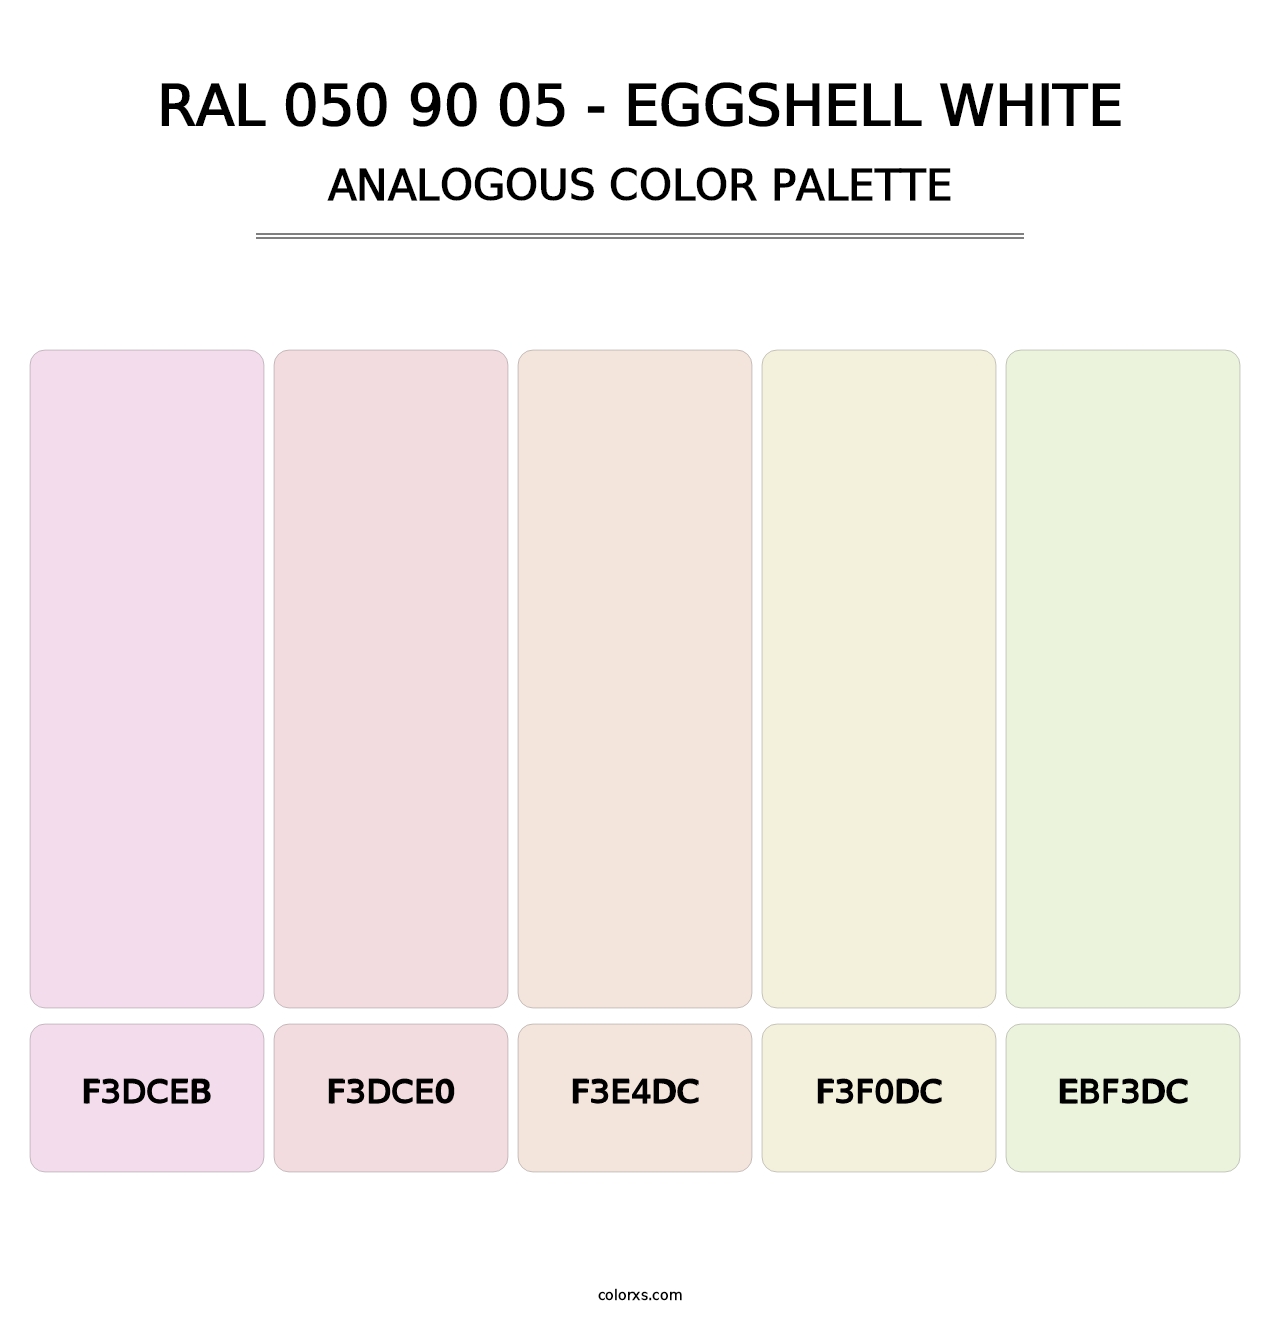 RAL 050 90 05 - Eggshell White - Analogous Color Palette